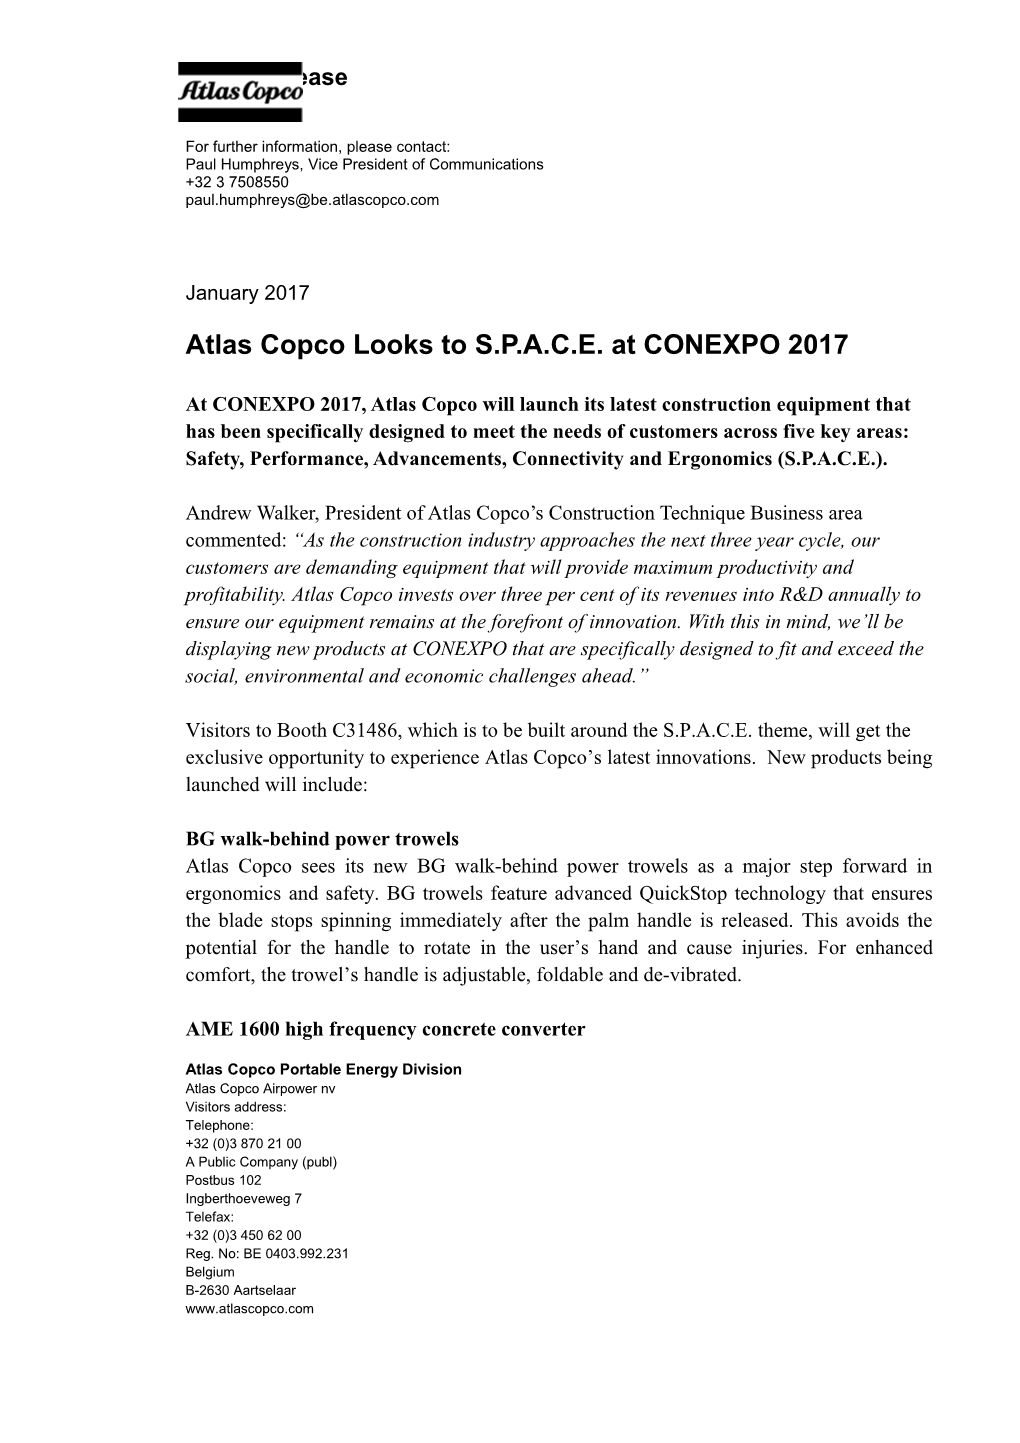 Atlas Copco Looks to S.P.A.C.E. at CONEXPO 2017